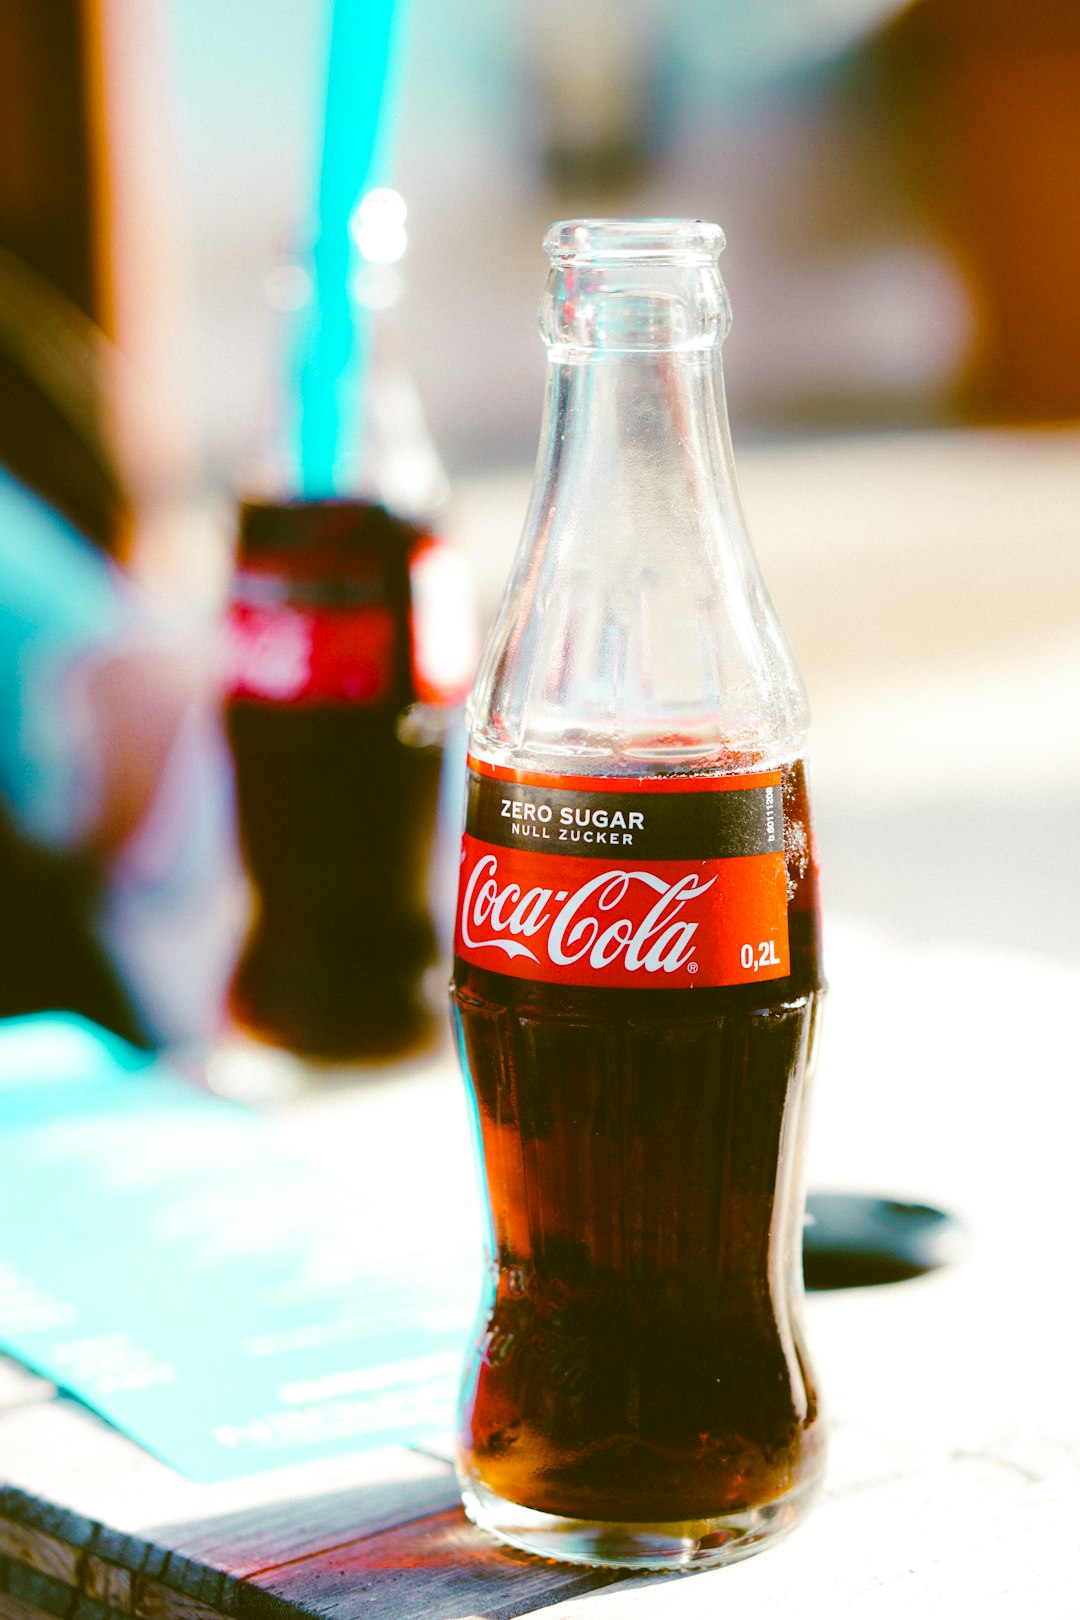 Coca-Cola soda bottle on table